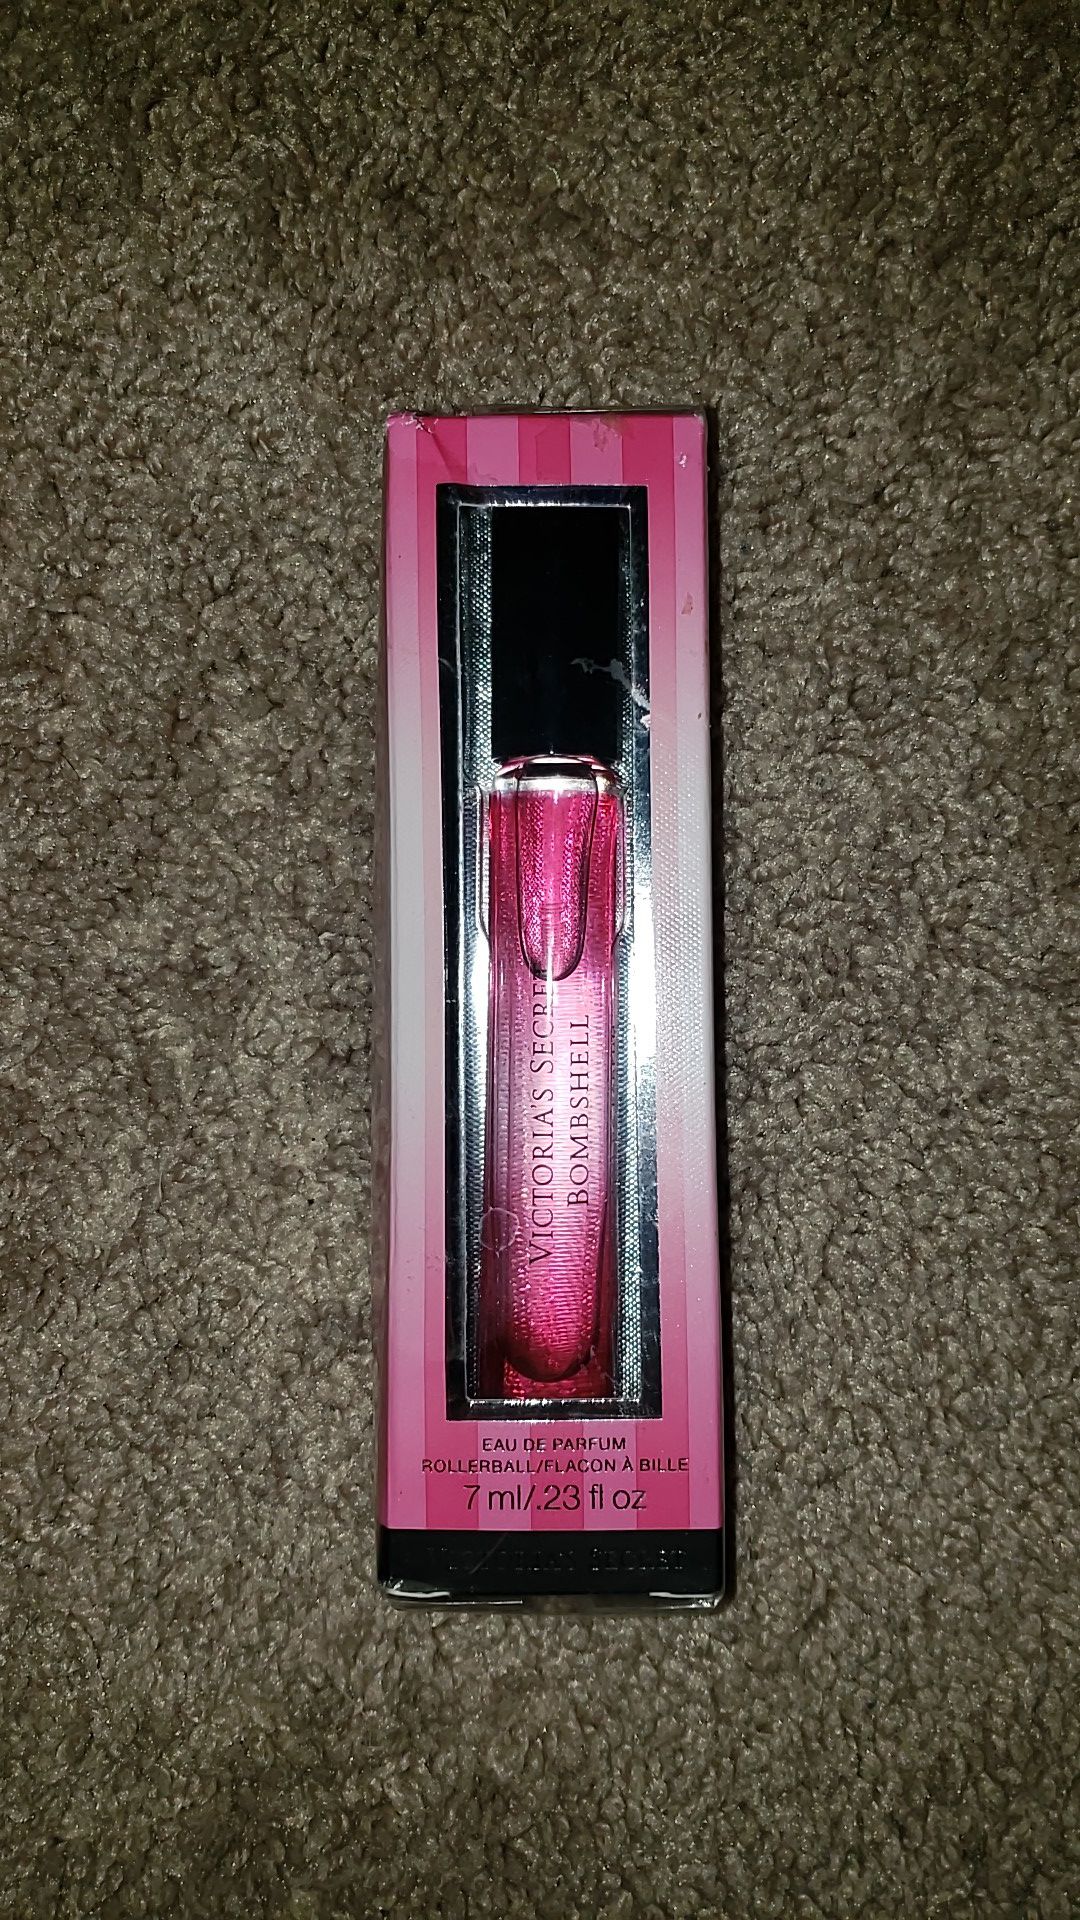 Victoria's Secret bombshell rollerball perfume 7 ml brand new